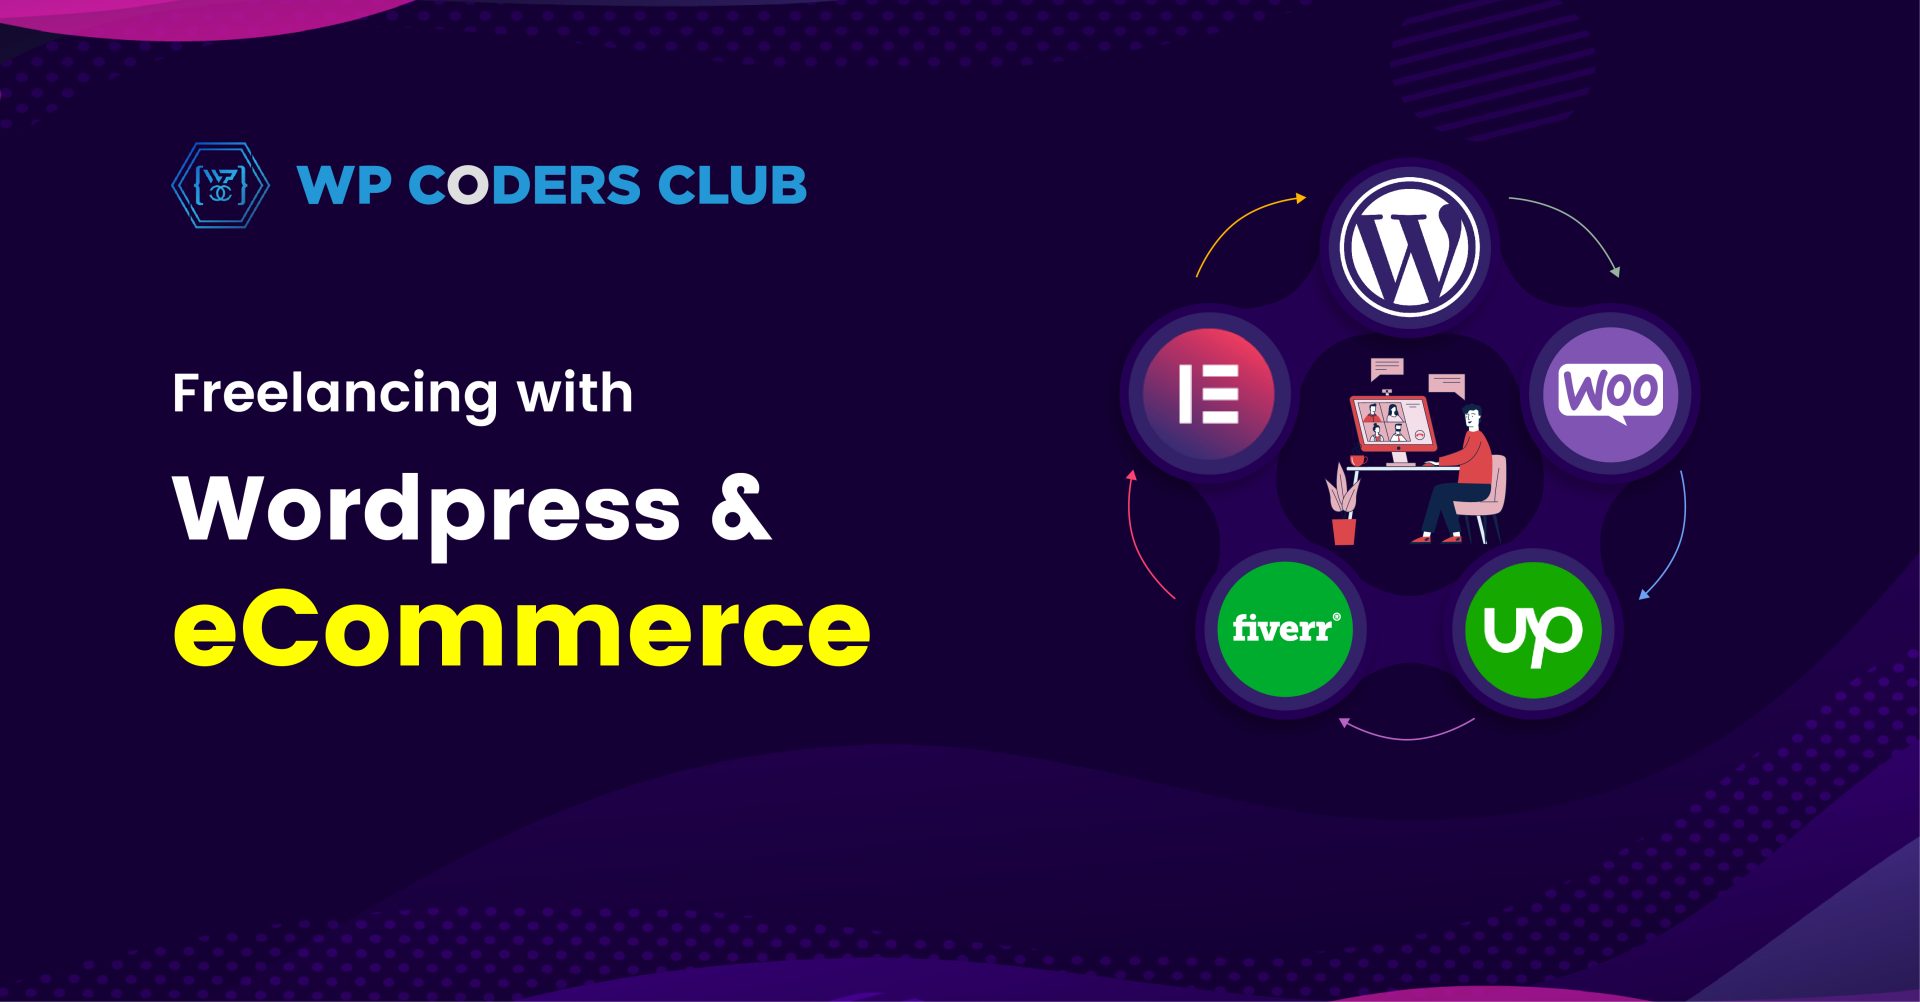 Wordpress & ecommerce